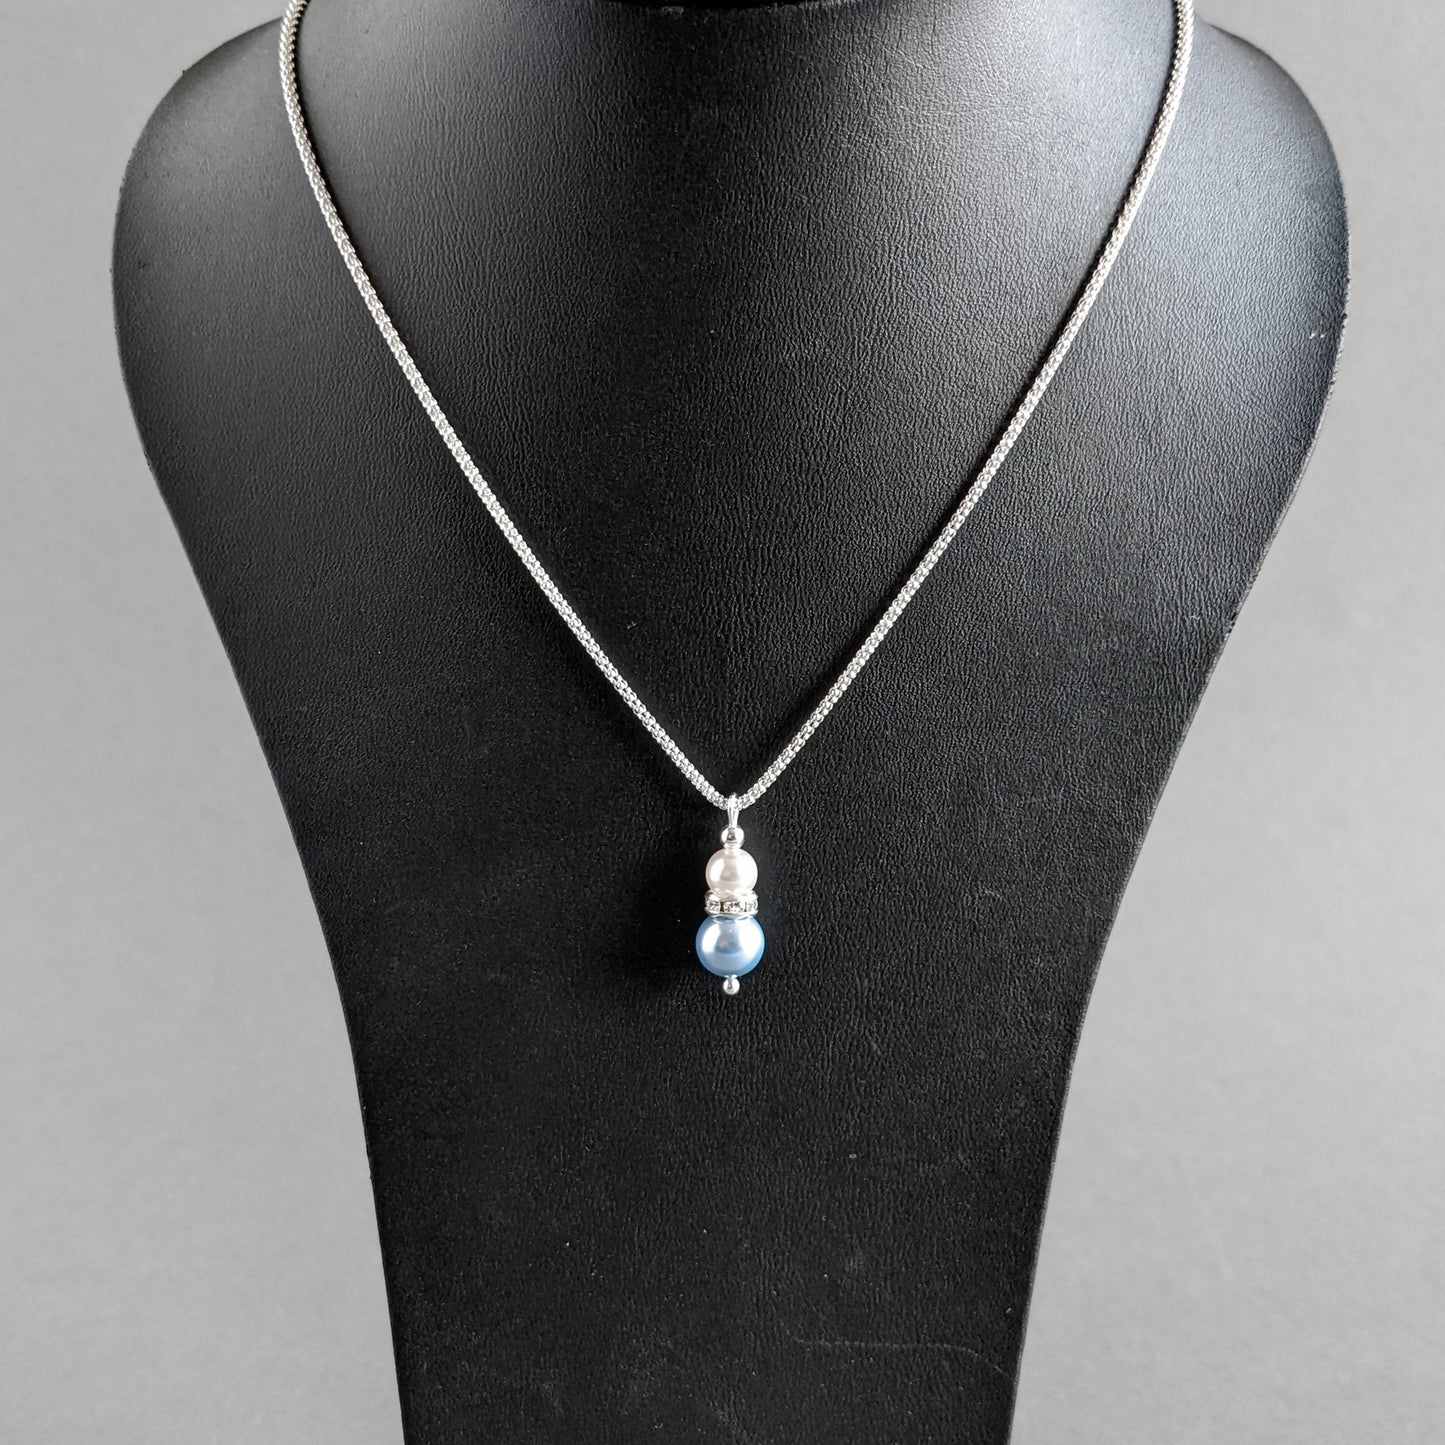 Baby blue pendant necklaces